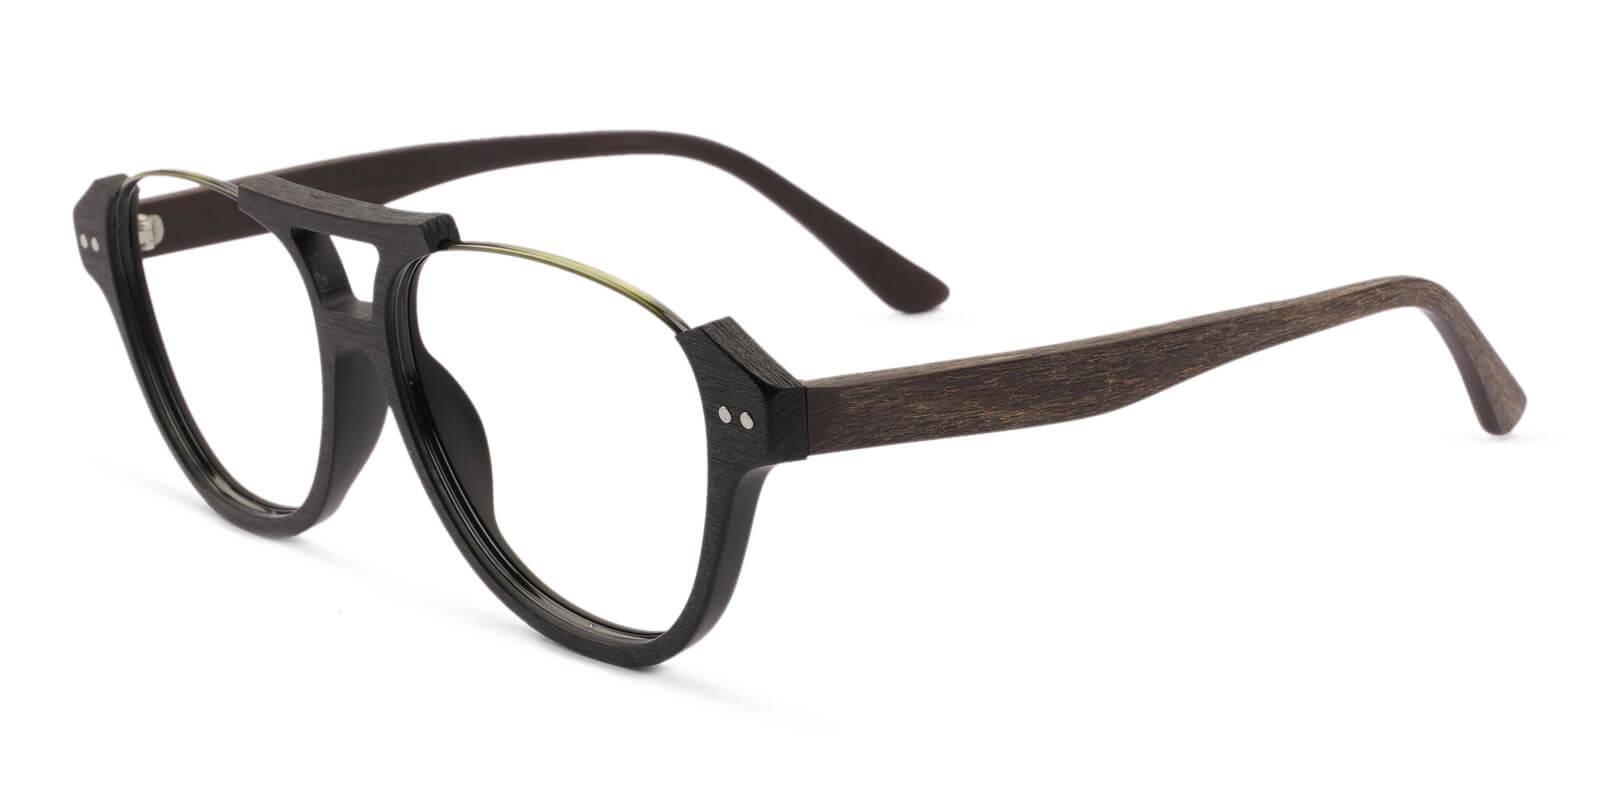 Ocean Gate Brown Combination Eyeglasses , UniversalBridgeFit Frames from ABBE Glasses